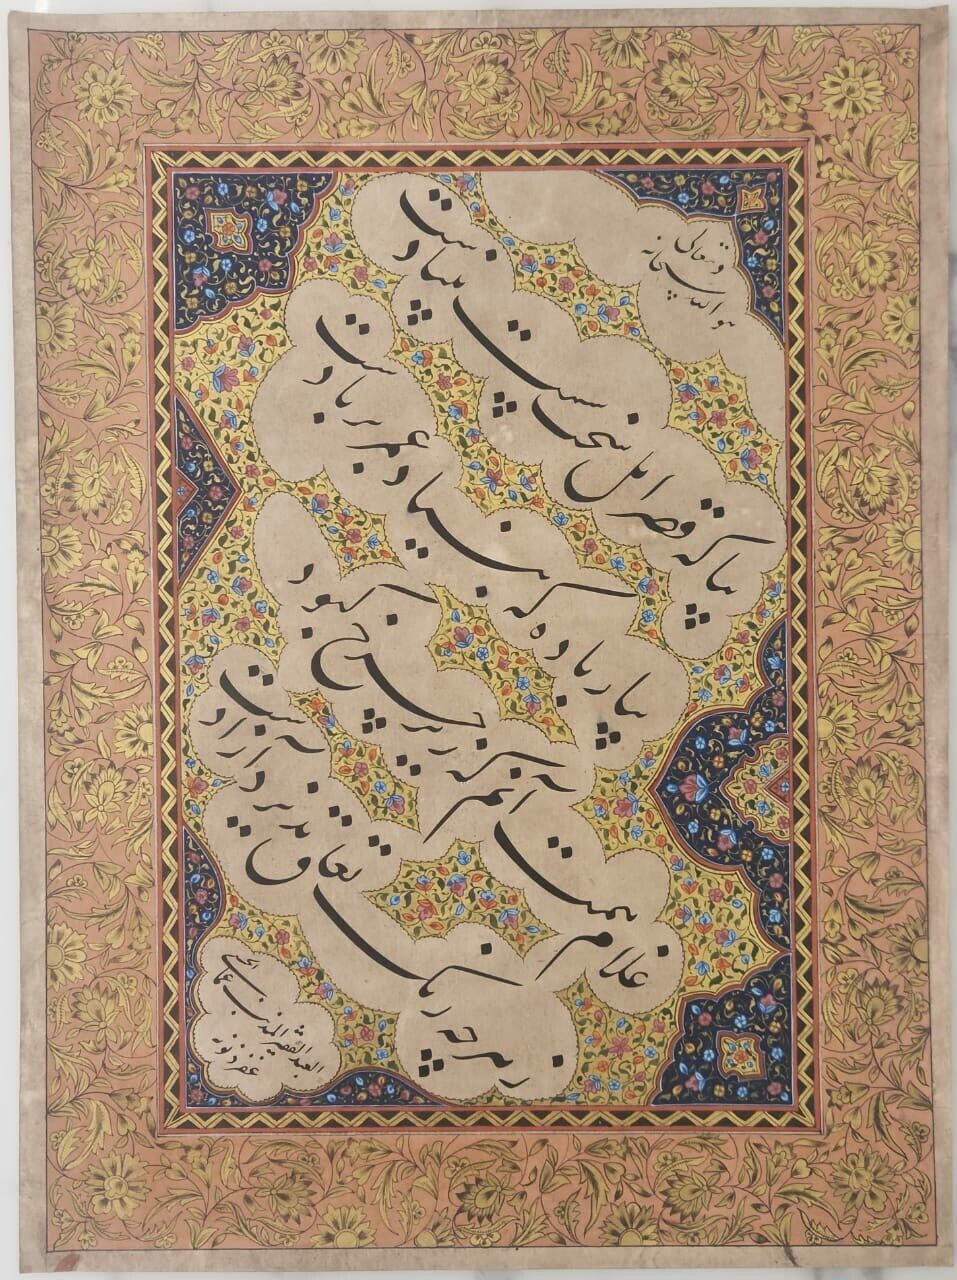 Rare Islamic Persian Qajar HANDWRITTEN calligraphy panel manuscript , Signed 